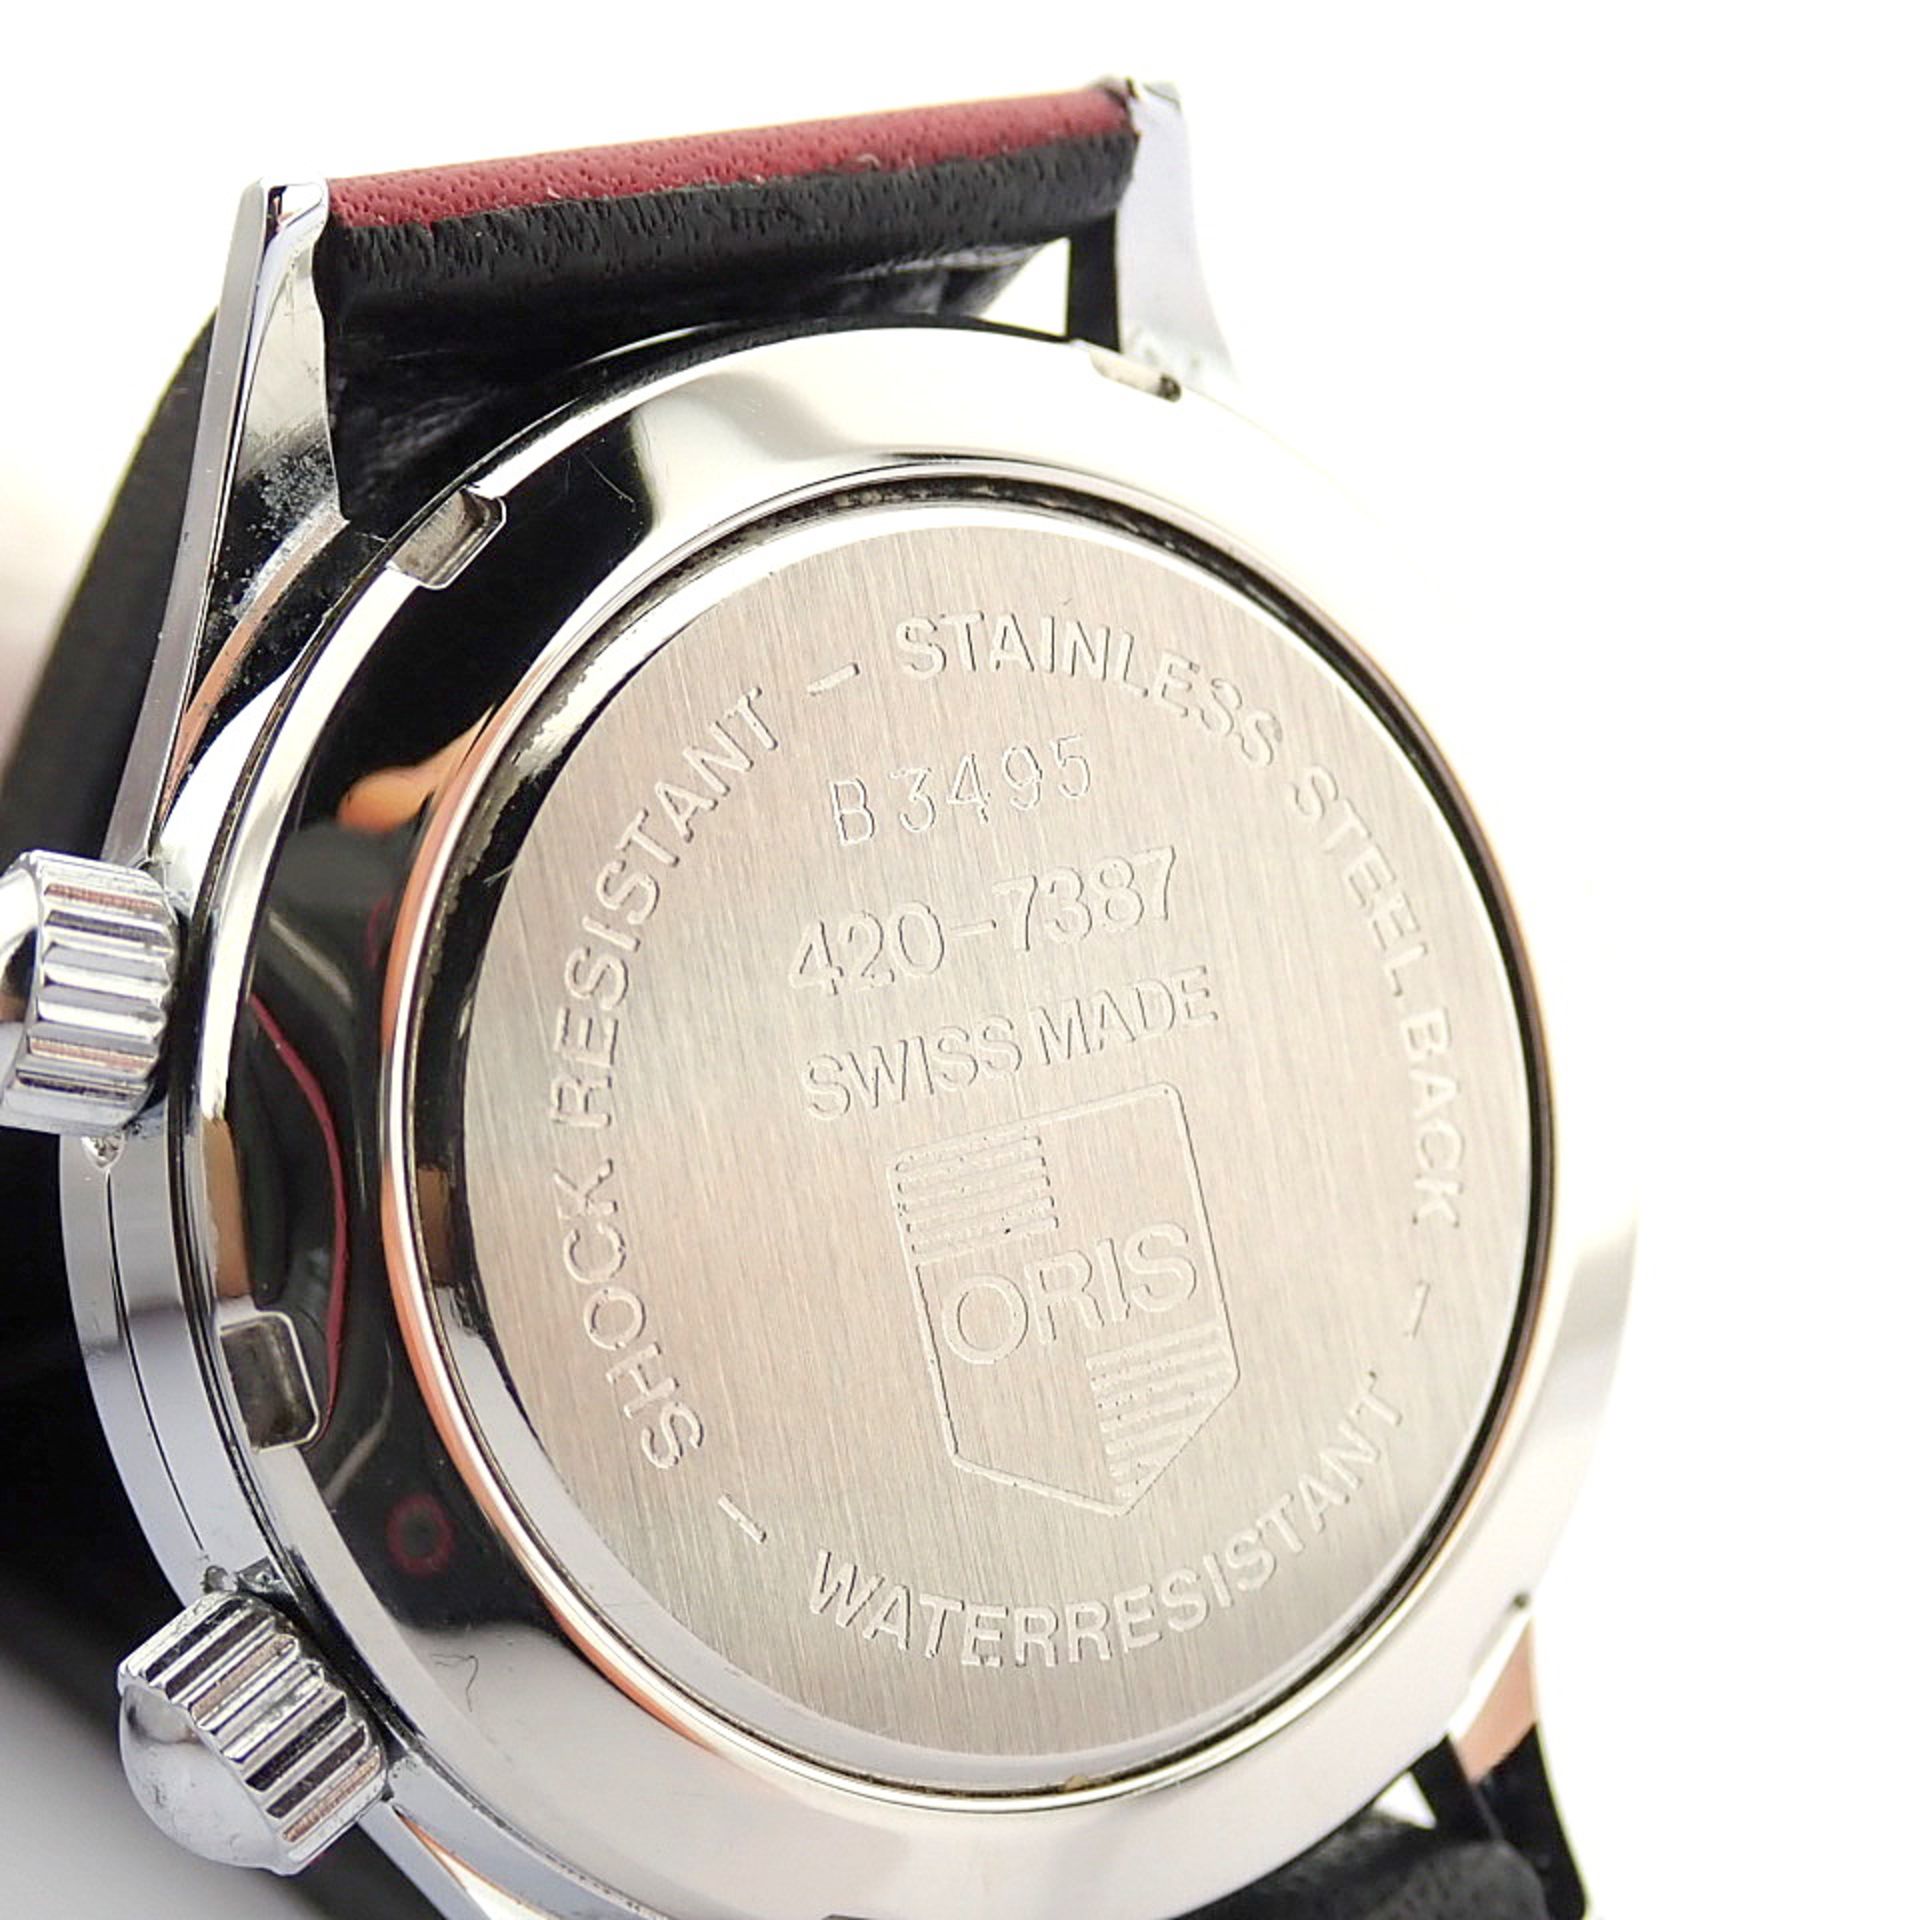 Oris / Wirstalarm 17 Jewels Anti-Shock - Gentlmen's Steel Wrist Watch - Image 9 of 10